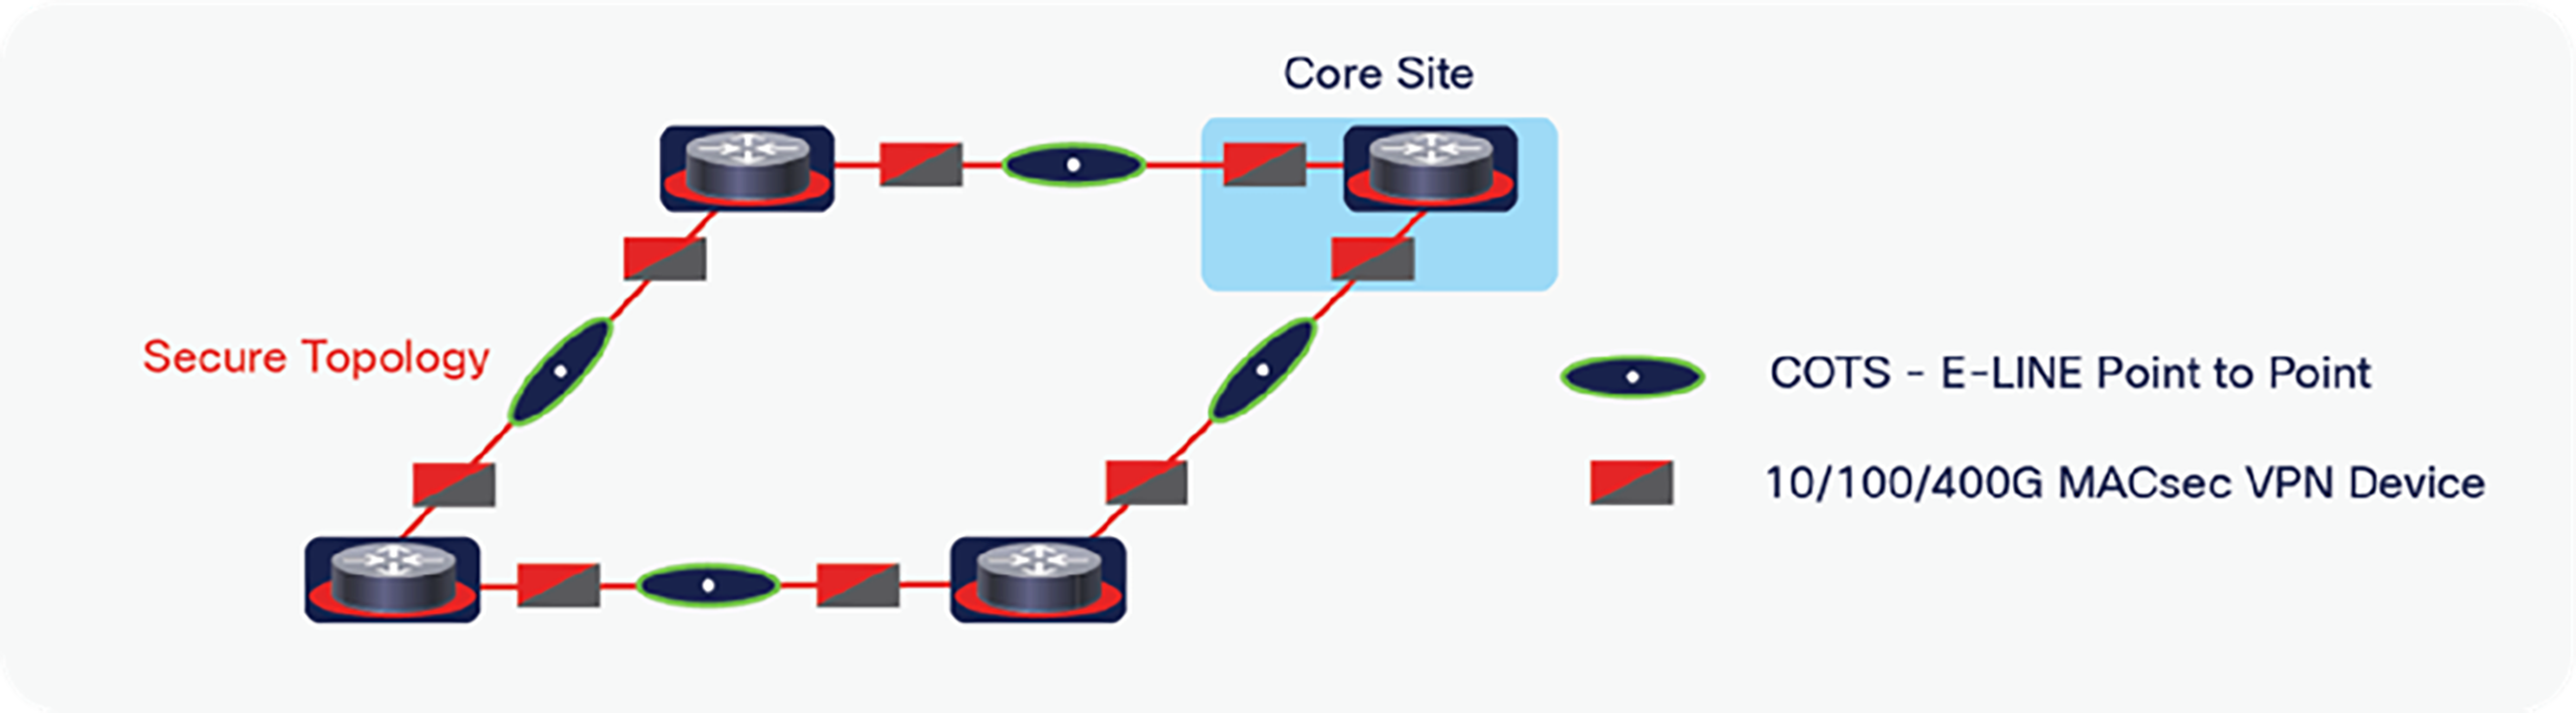 Simplified secure lean core design